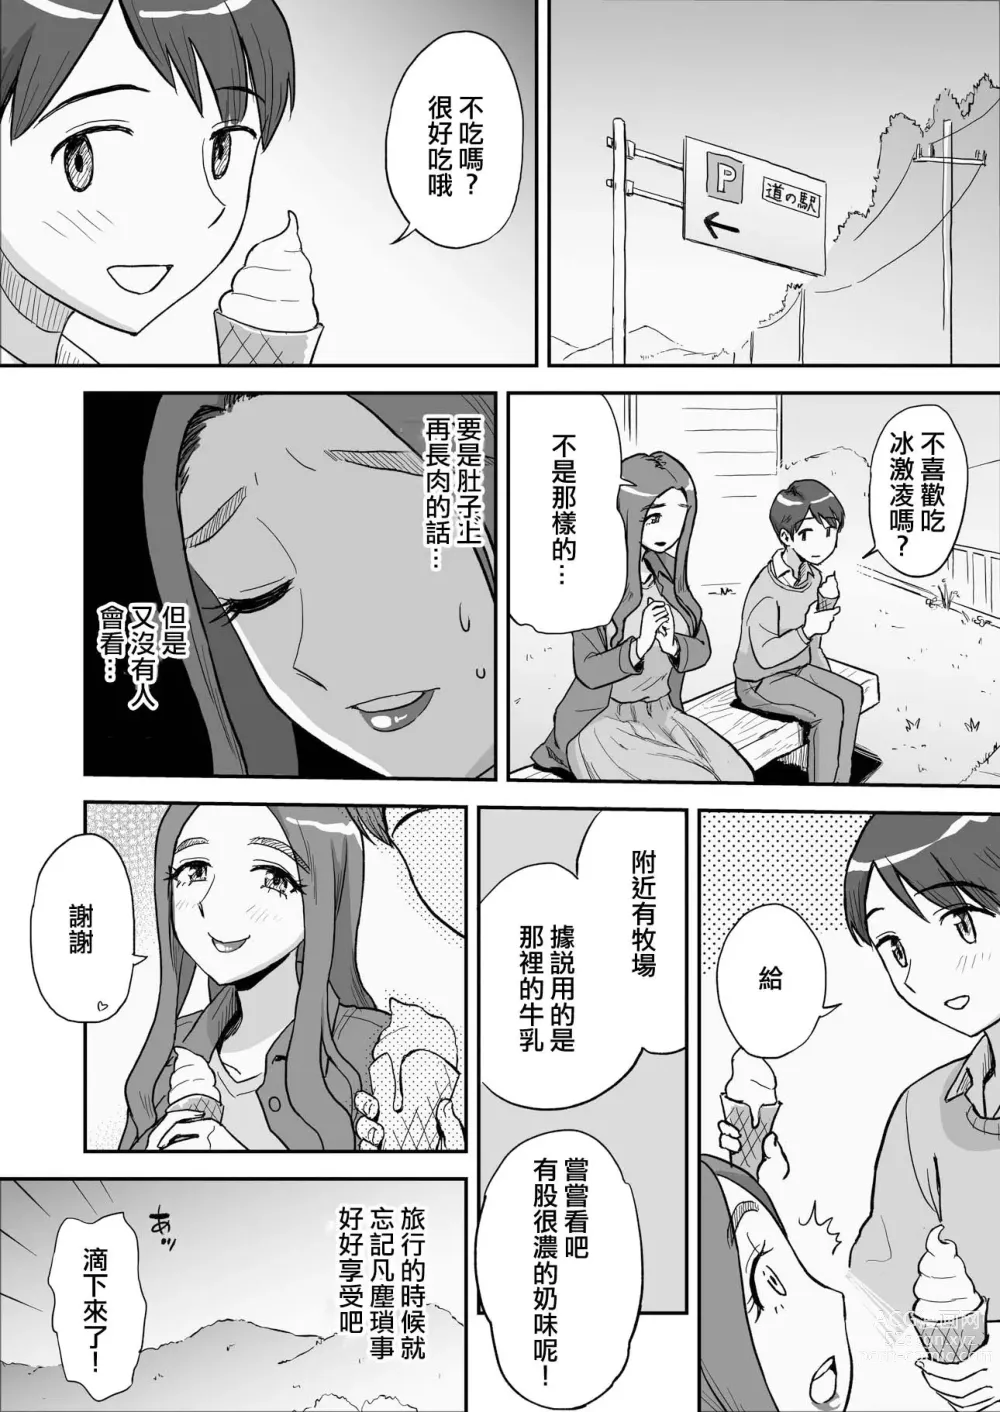 Page 10 of doujinshi 僅此一天的媽媽 這是隻屬於我們...兩人的秘密...哦?....